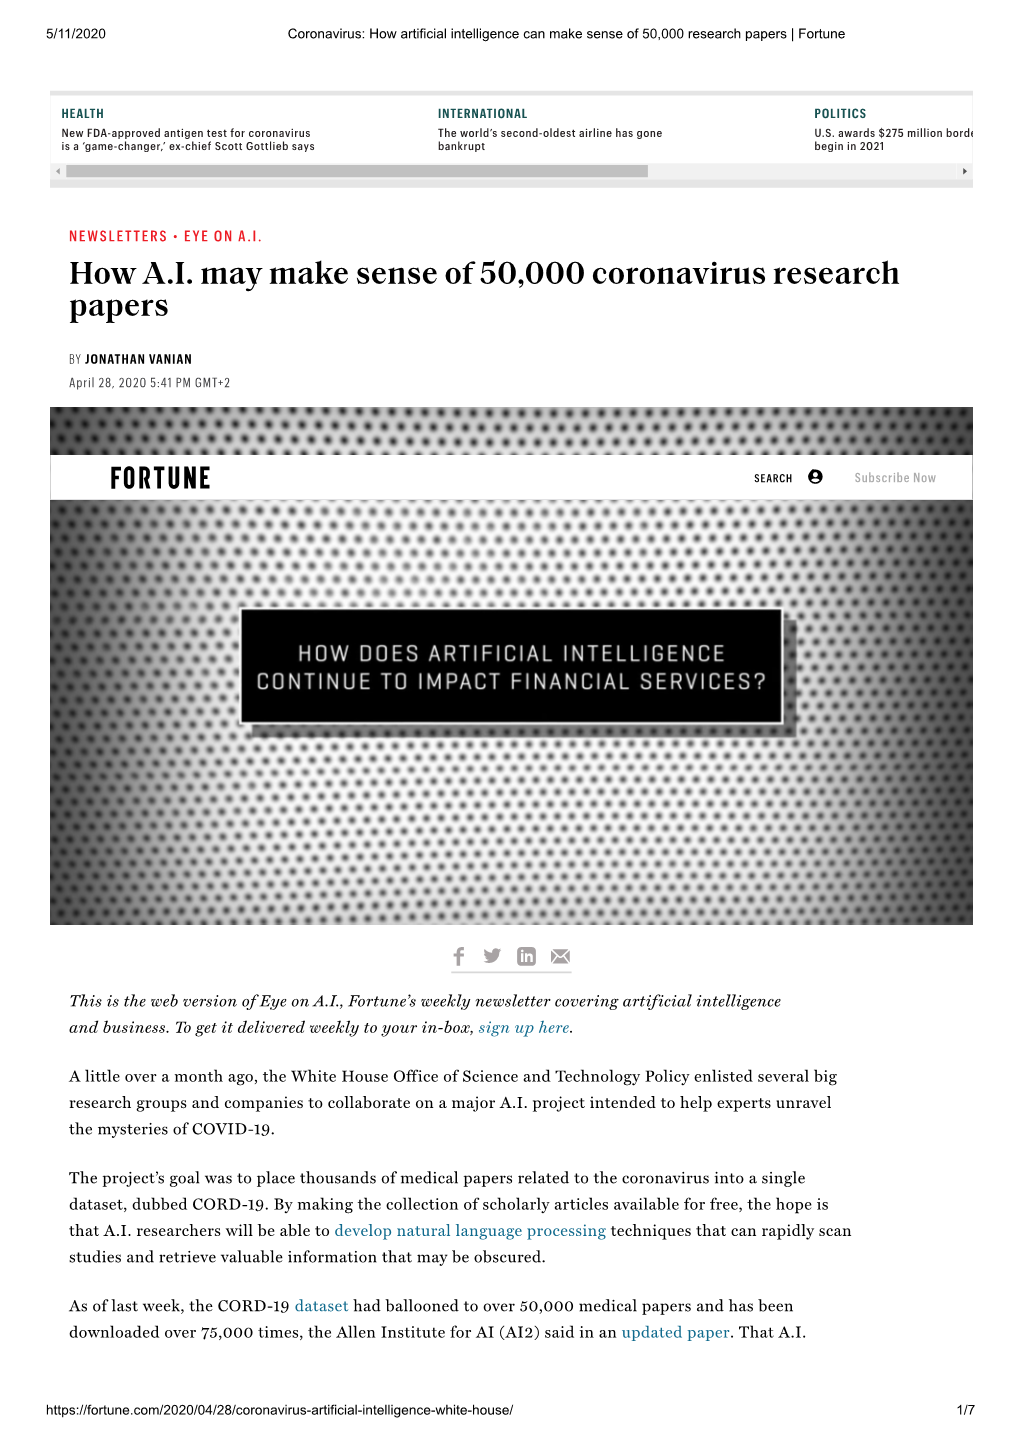 How A.I. May Make Sense of 50,000 Coronavirus Research Papers